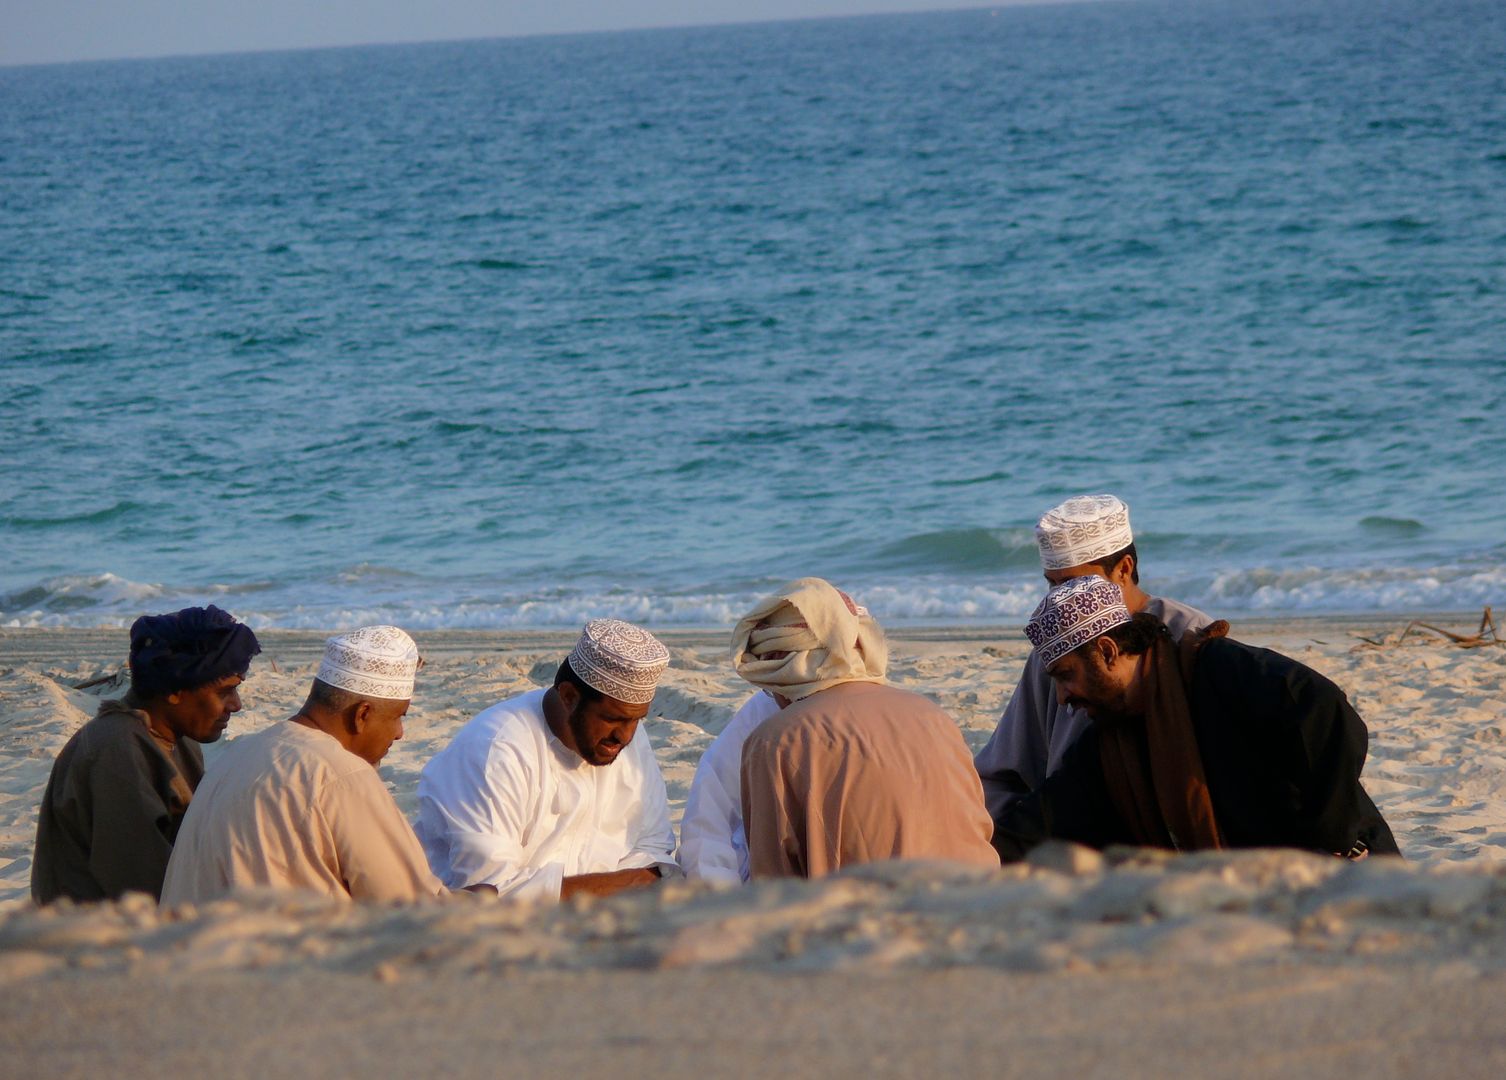 2012.02.23, Playing cards on the beach. (Salalah, Oman)